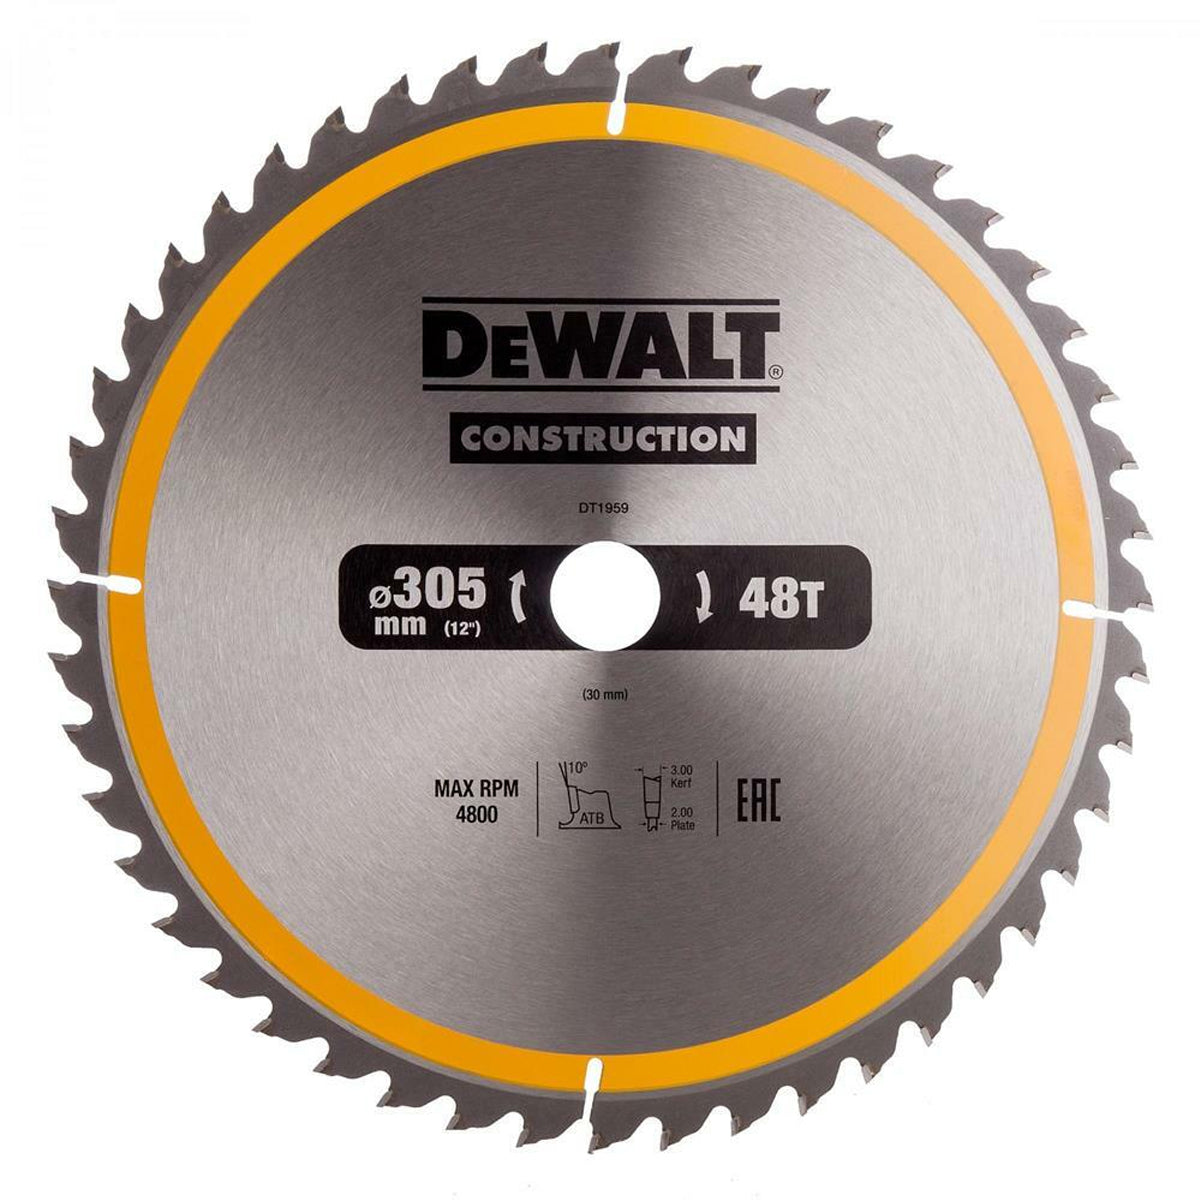 Dewalt Dt1959 Qz 305mm Construction Circular Saw Blade 48t